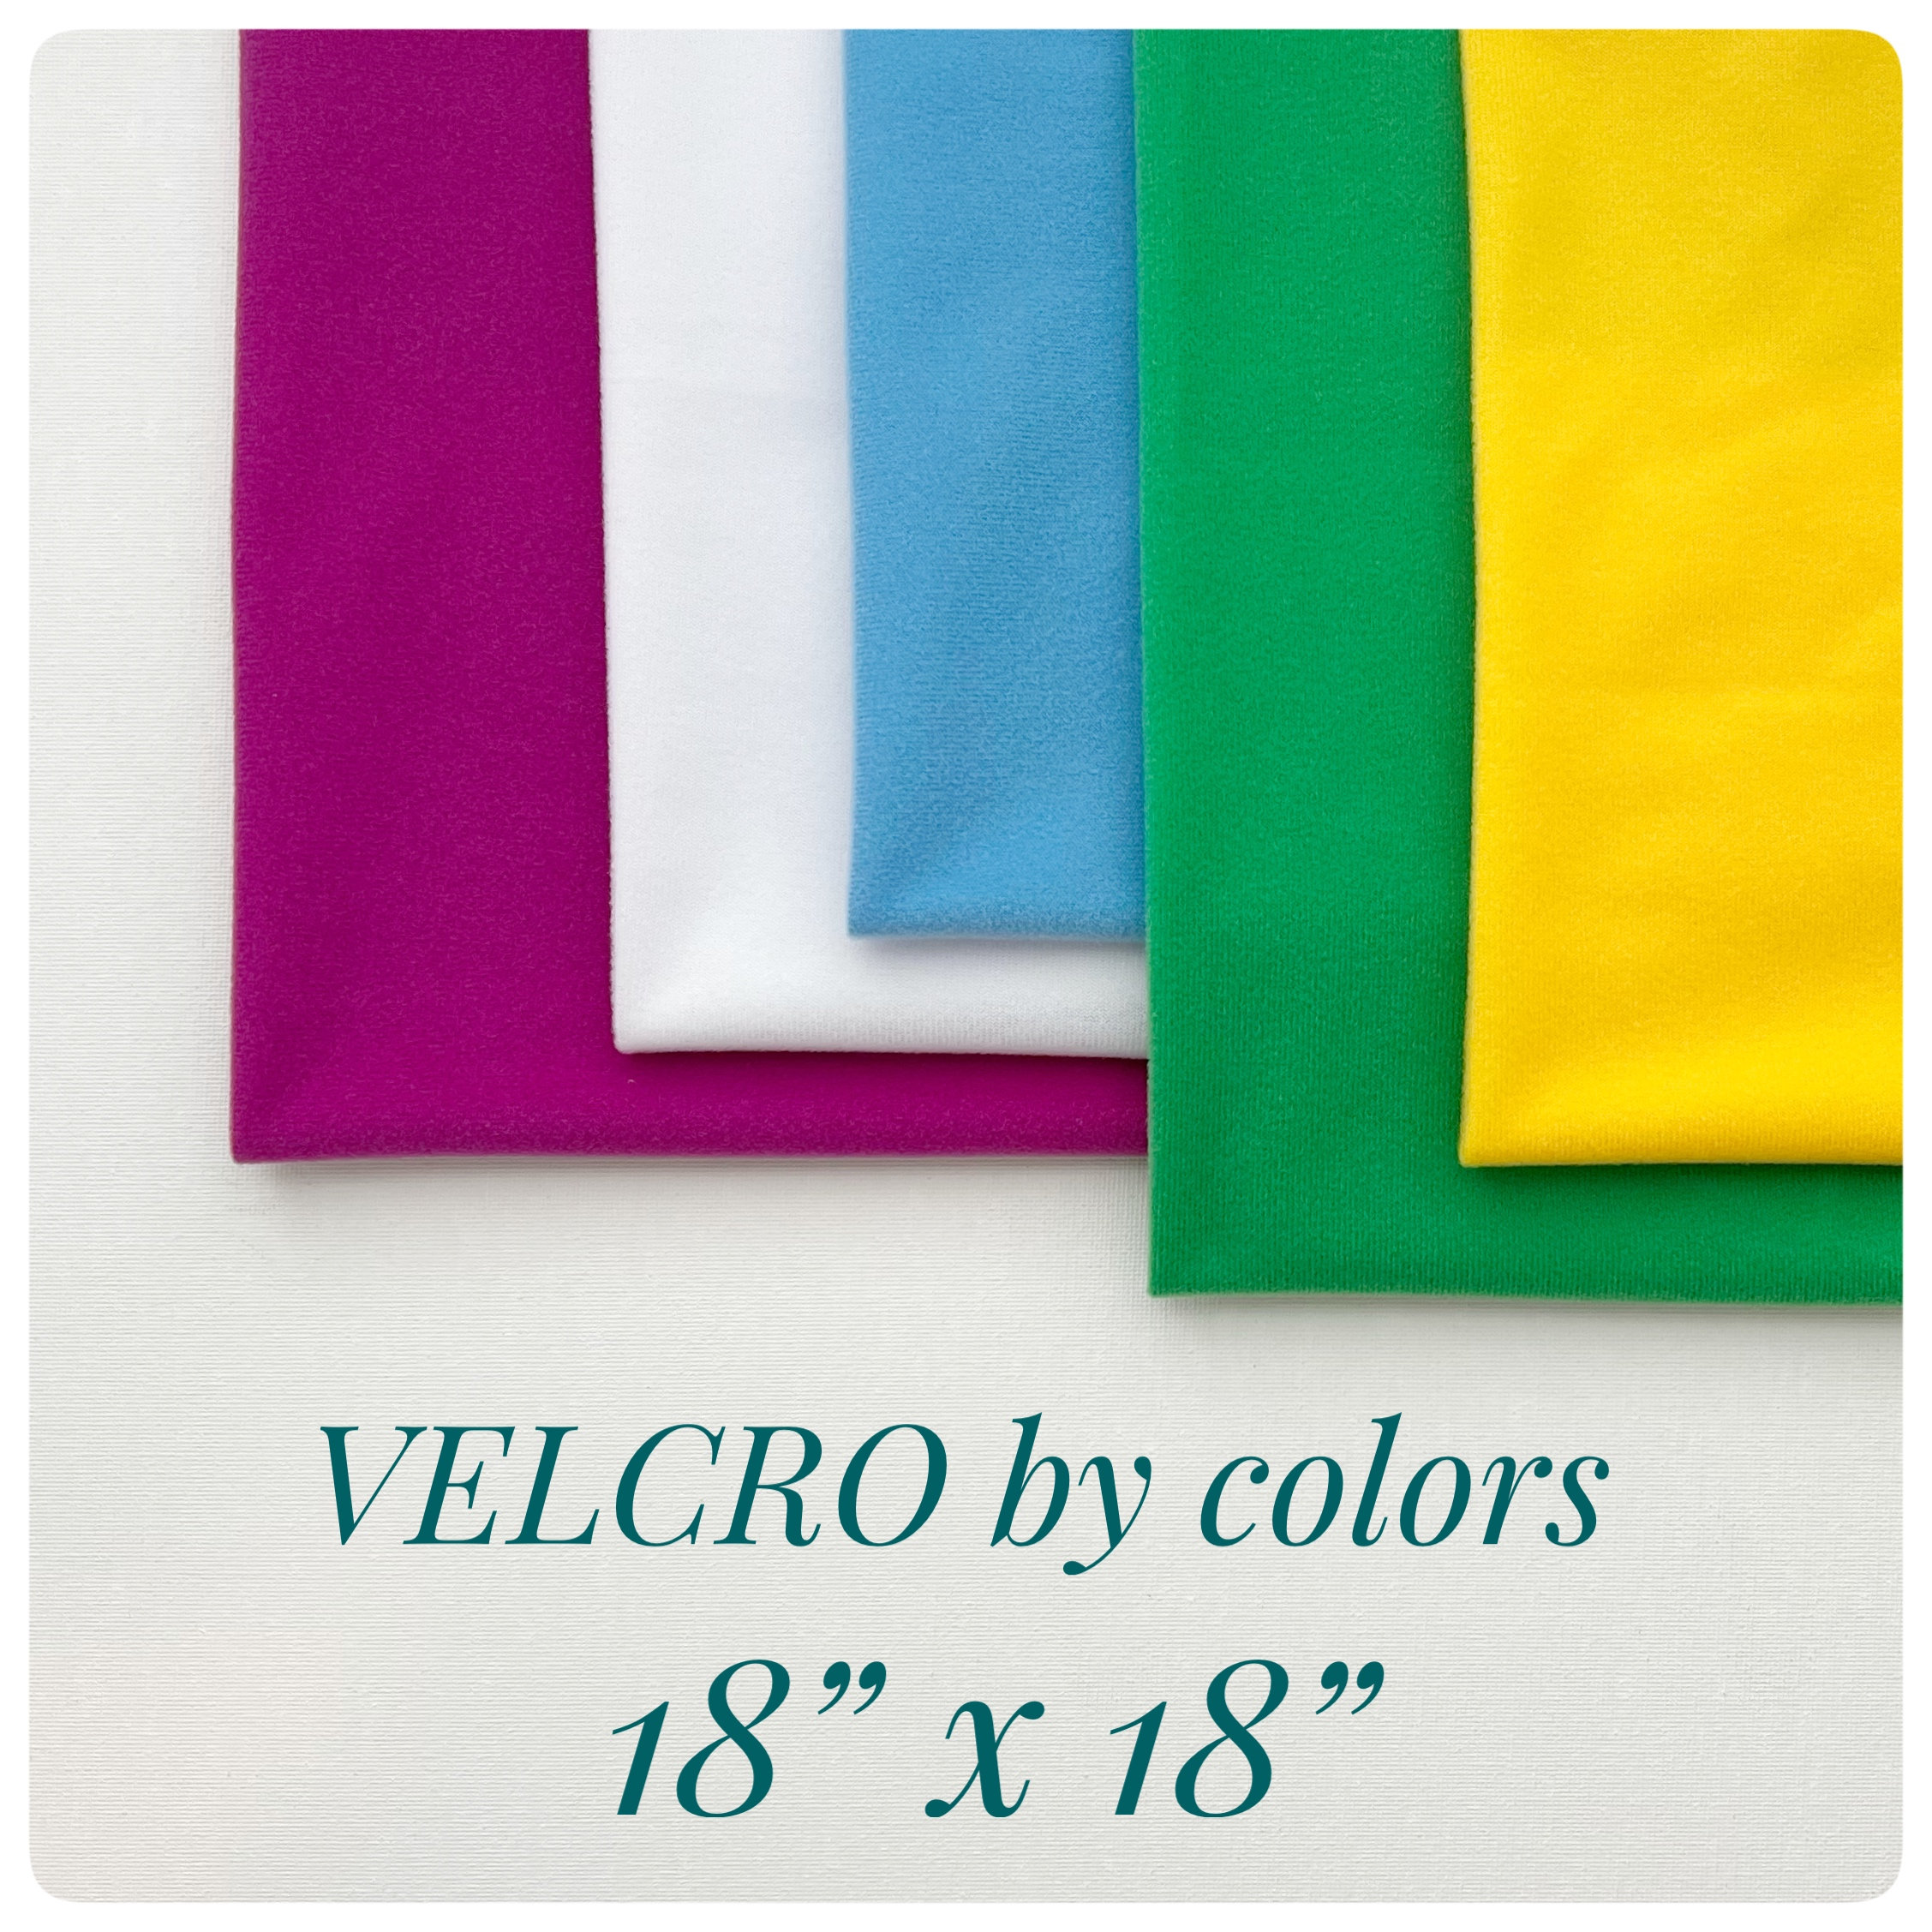 Velcro Patch Panel Molle (25 mm) - size 8 x 9.75 (20 x 25 cm) - OEM